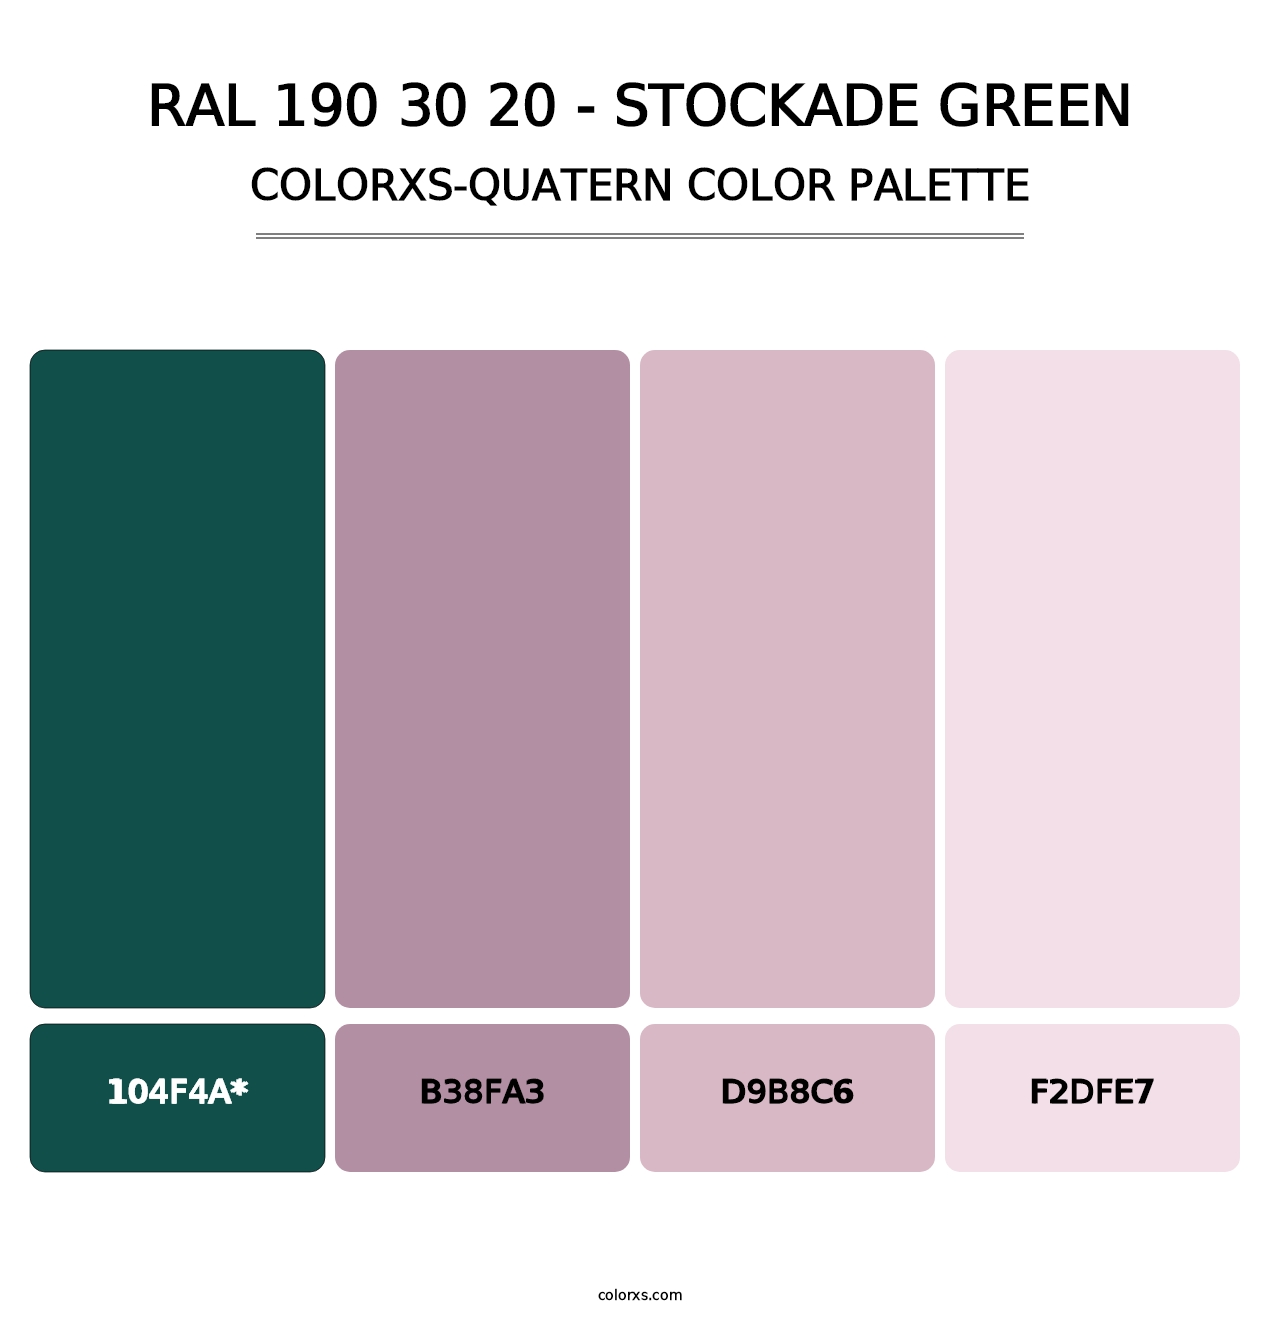 RAL 190 30 20 - Stockade Green - Colorxs Quatern Palette